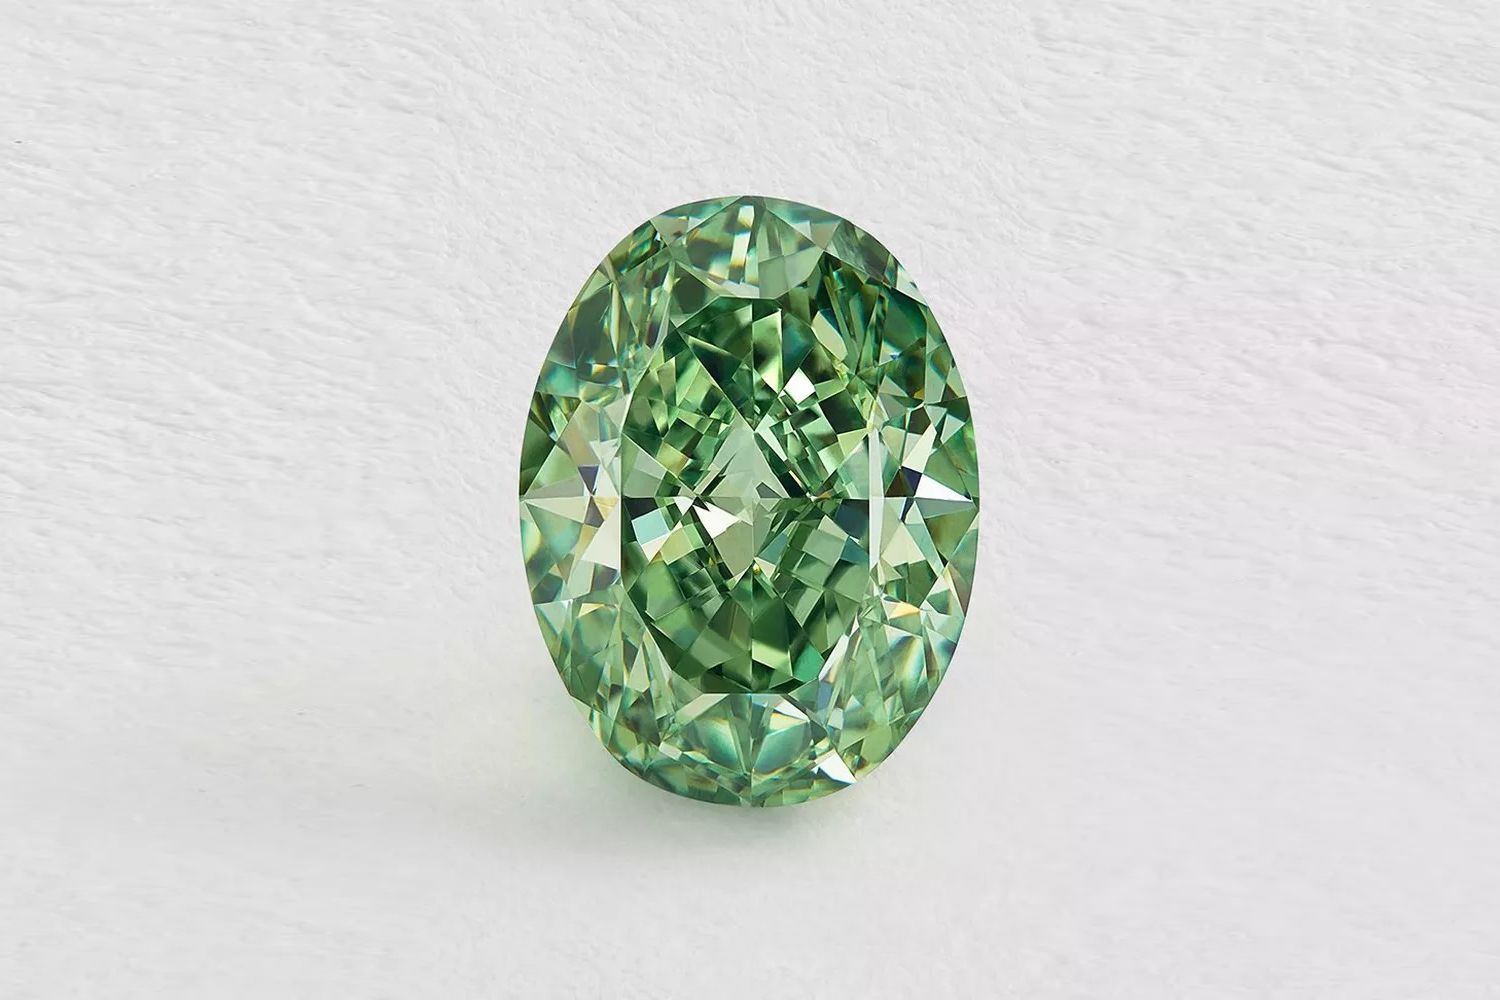 De Beers oval green diamond from 1888 Hero Diamonds collection